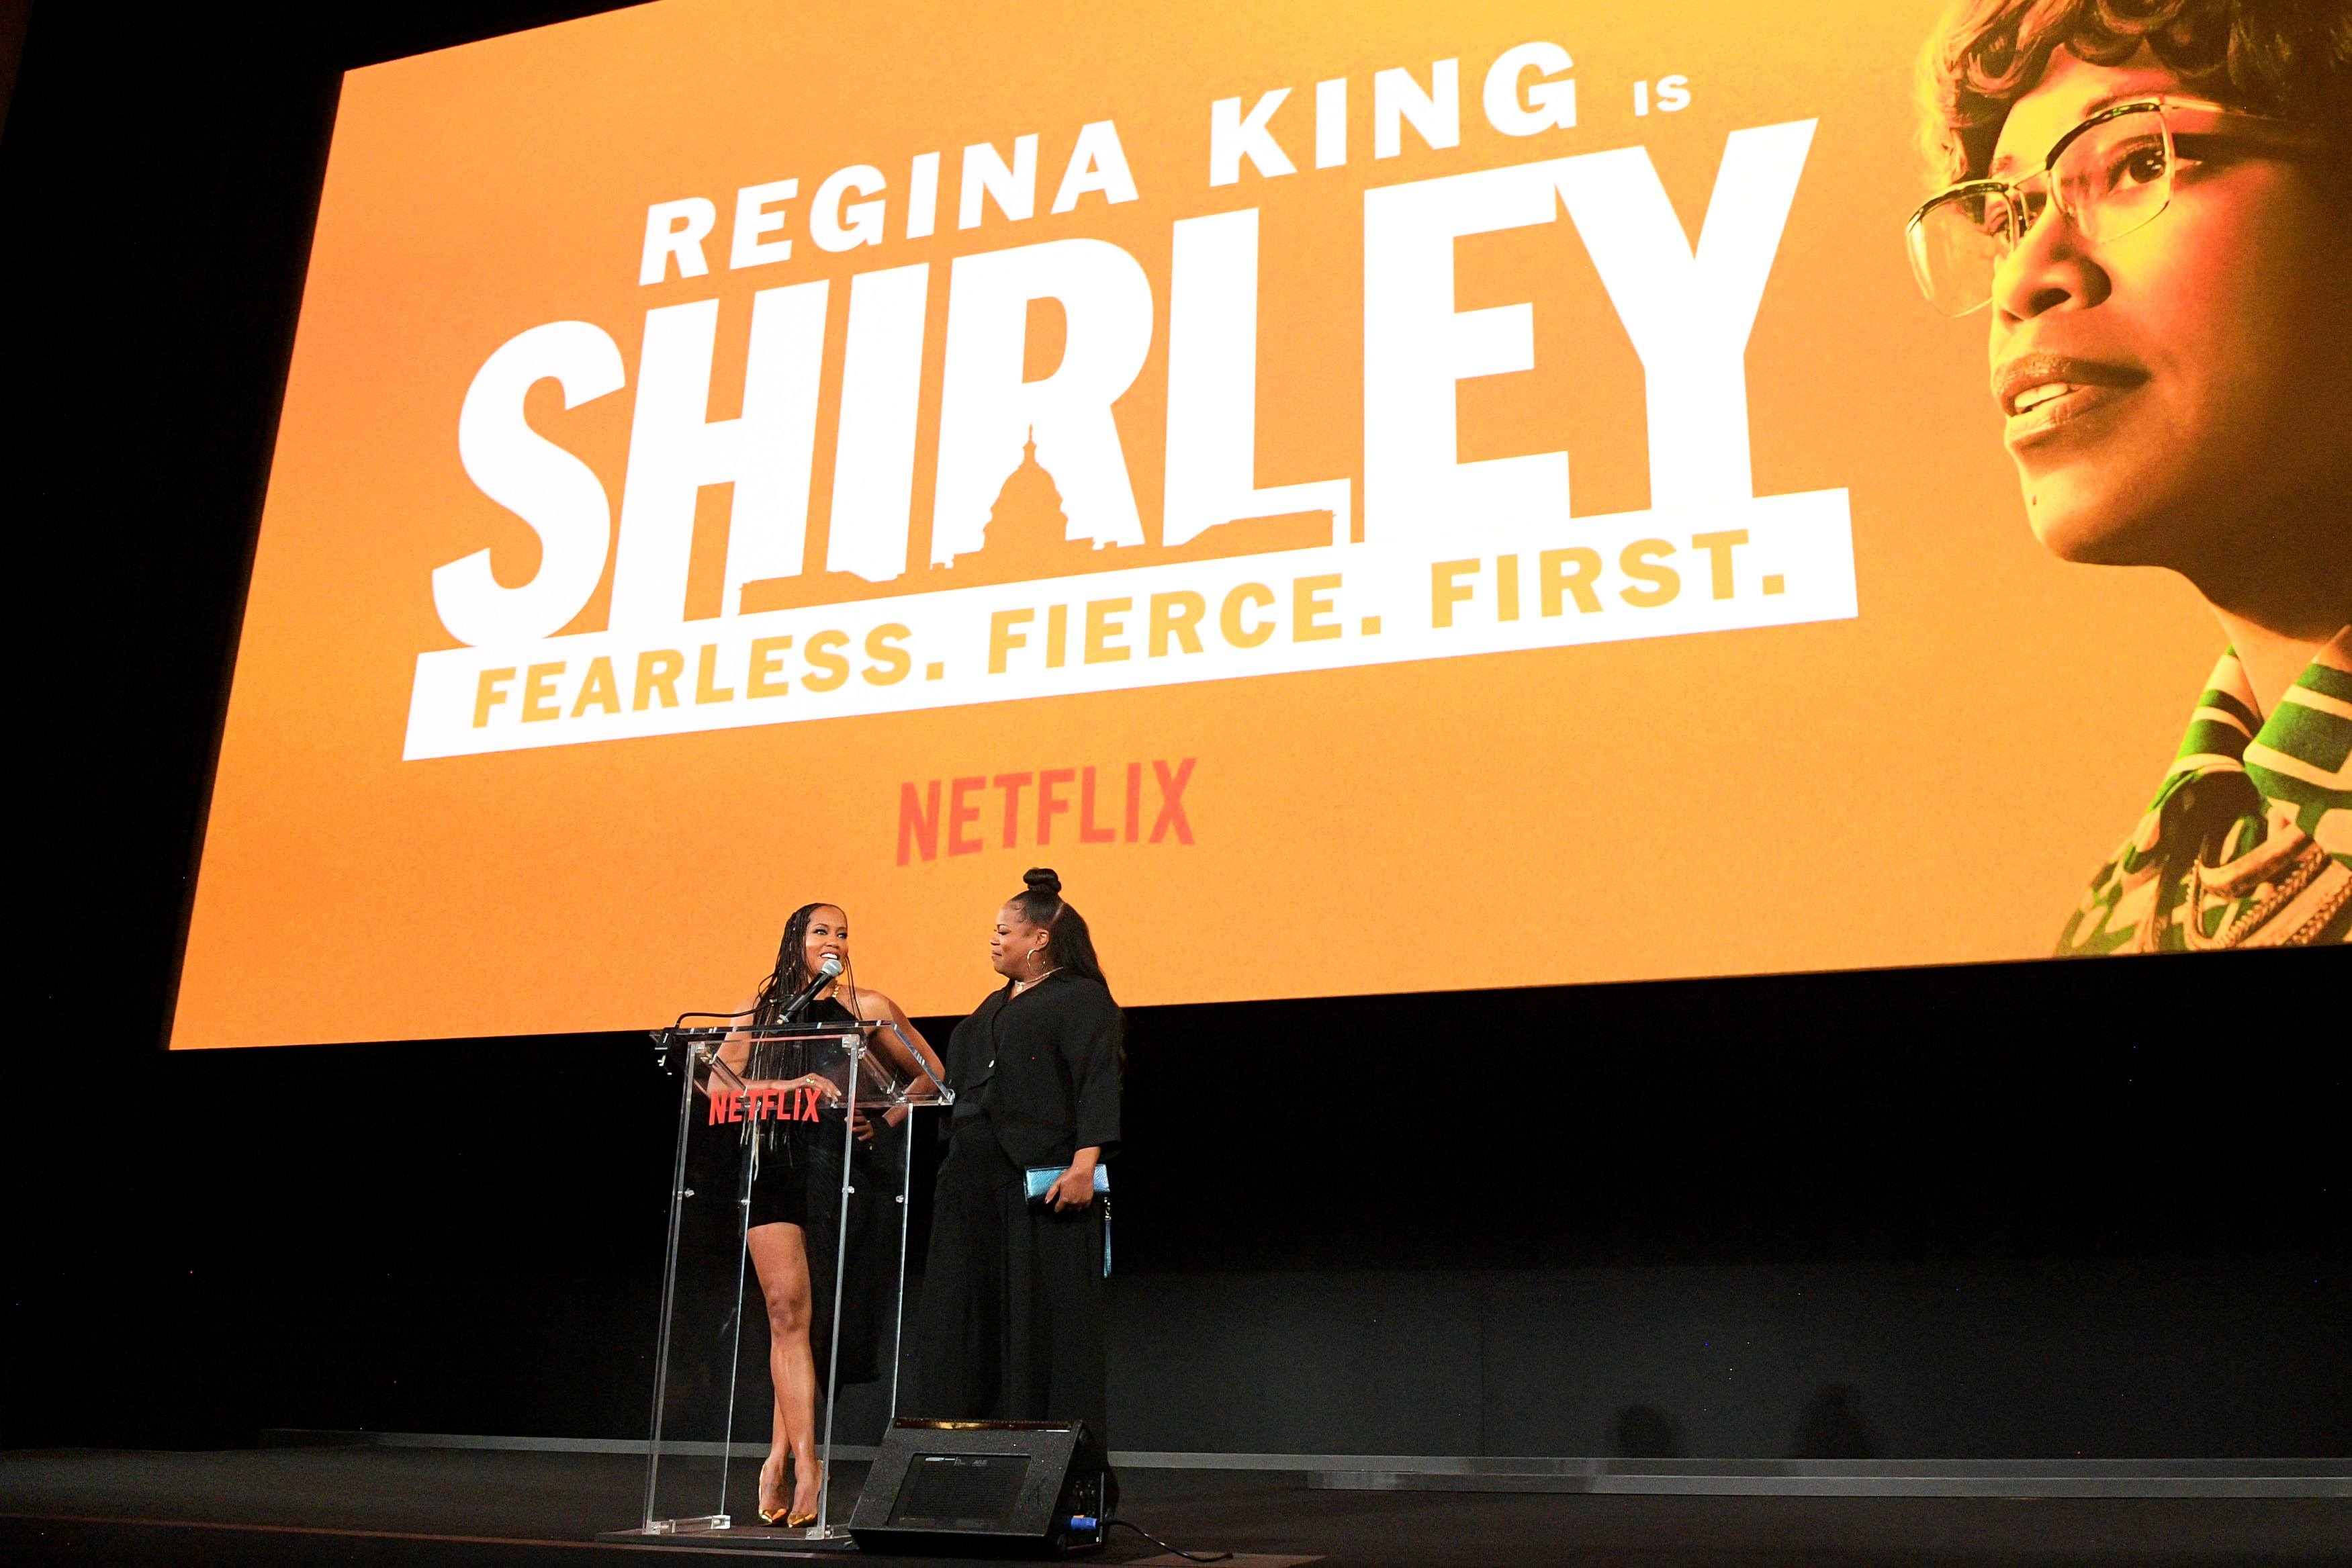 'Shirley' premiere in LA assets